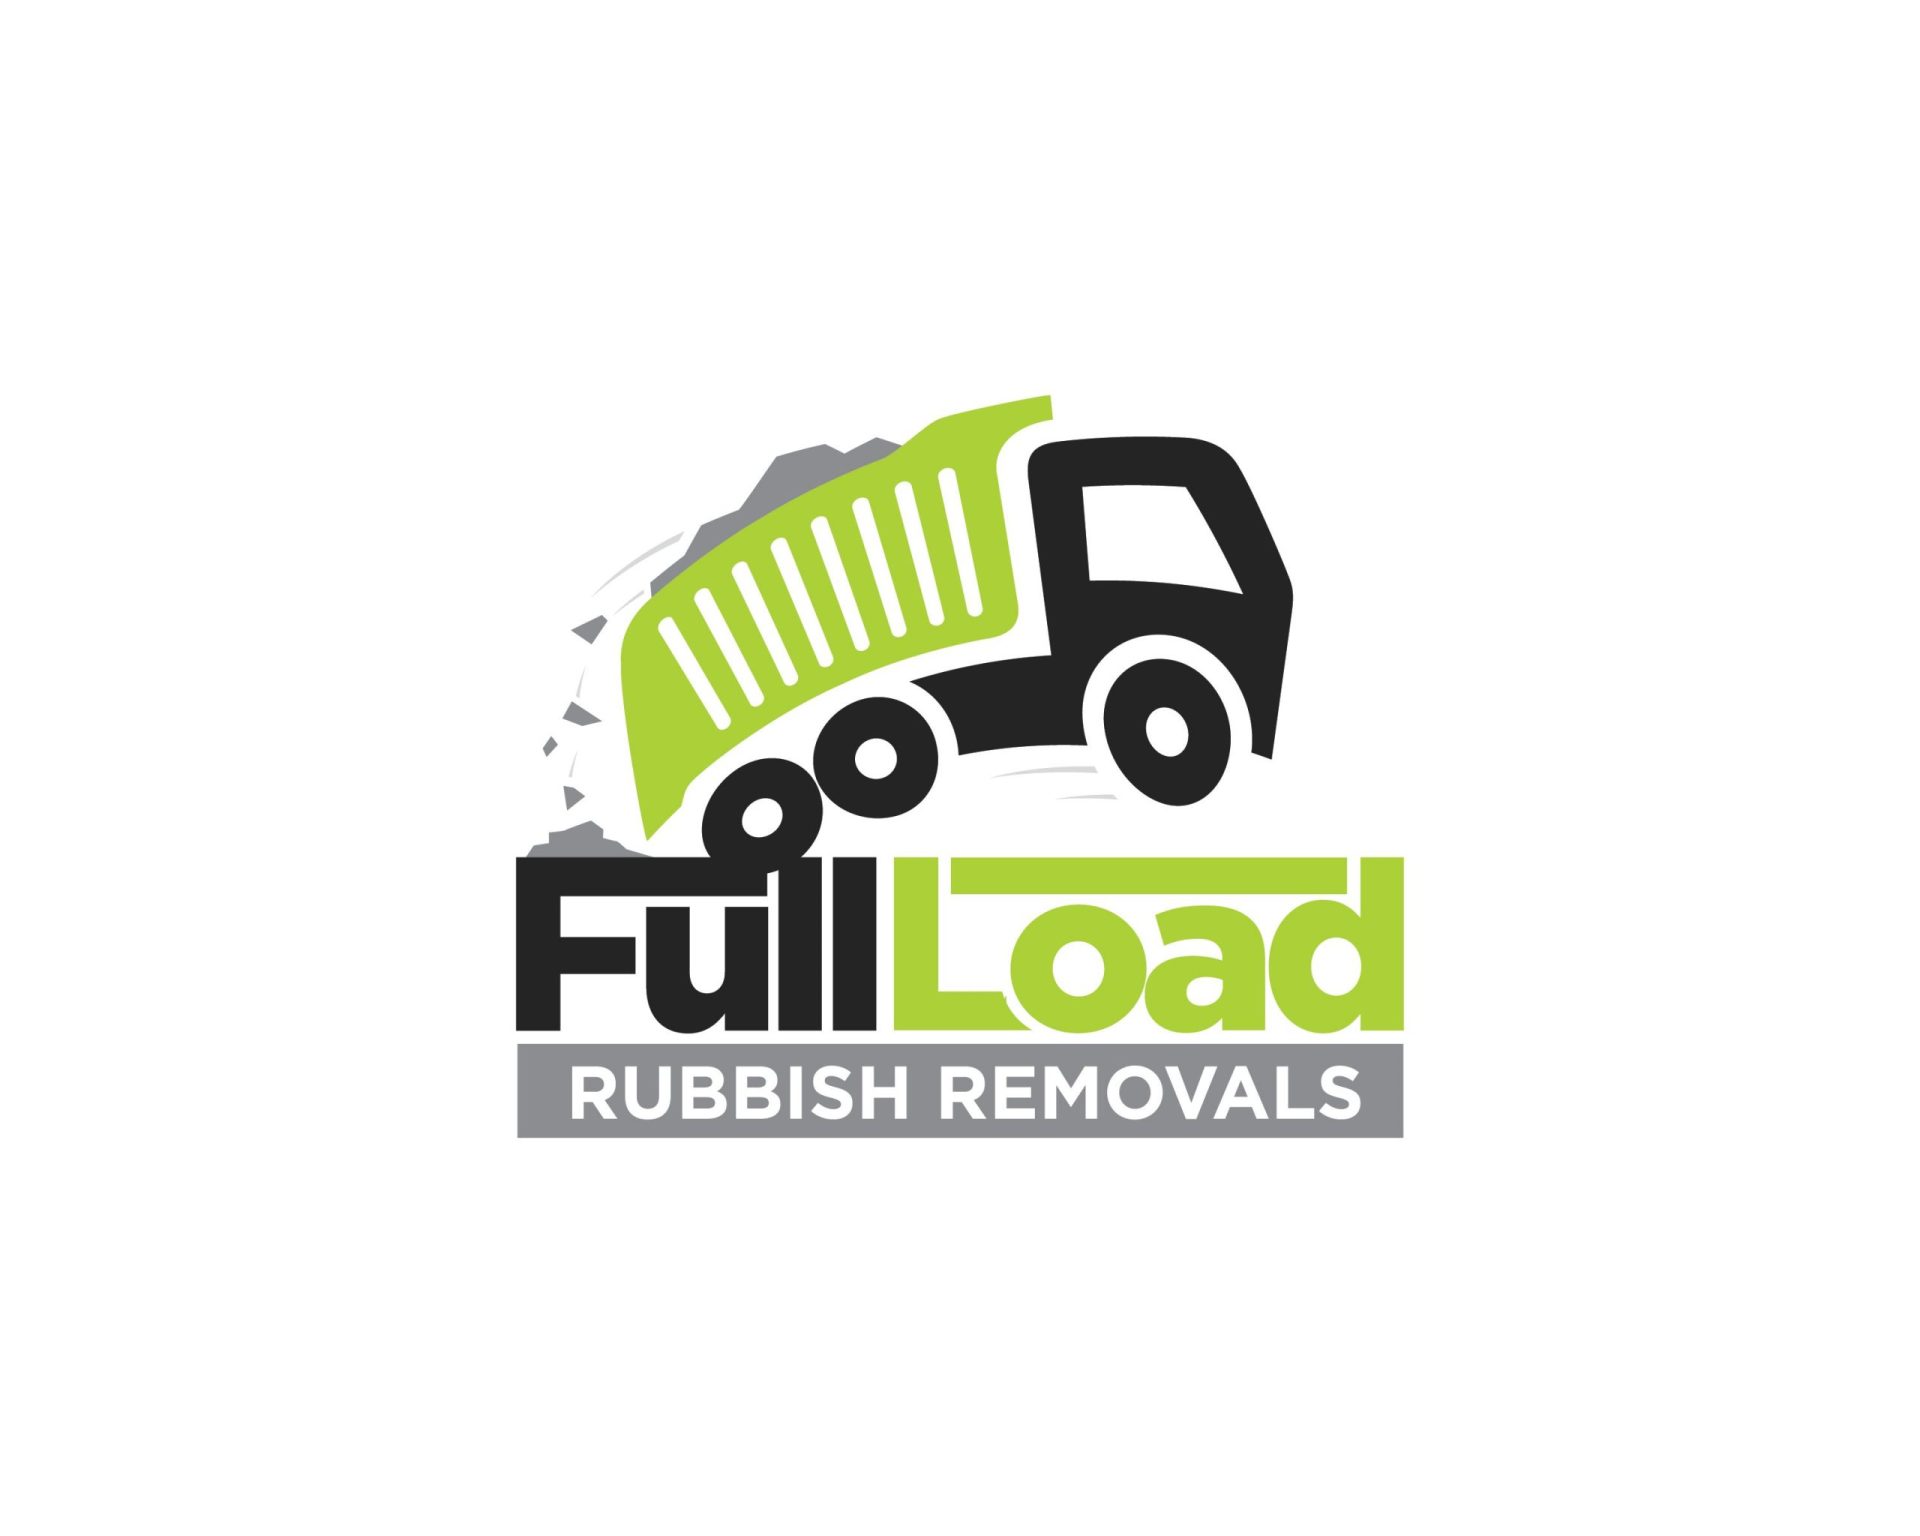 junk removal logo ideas 8